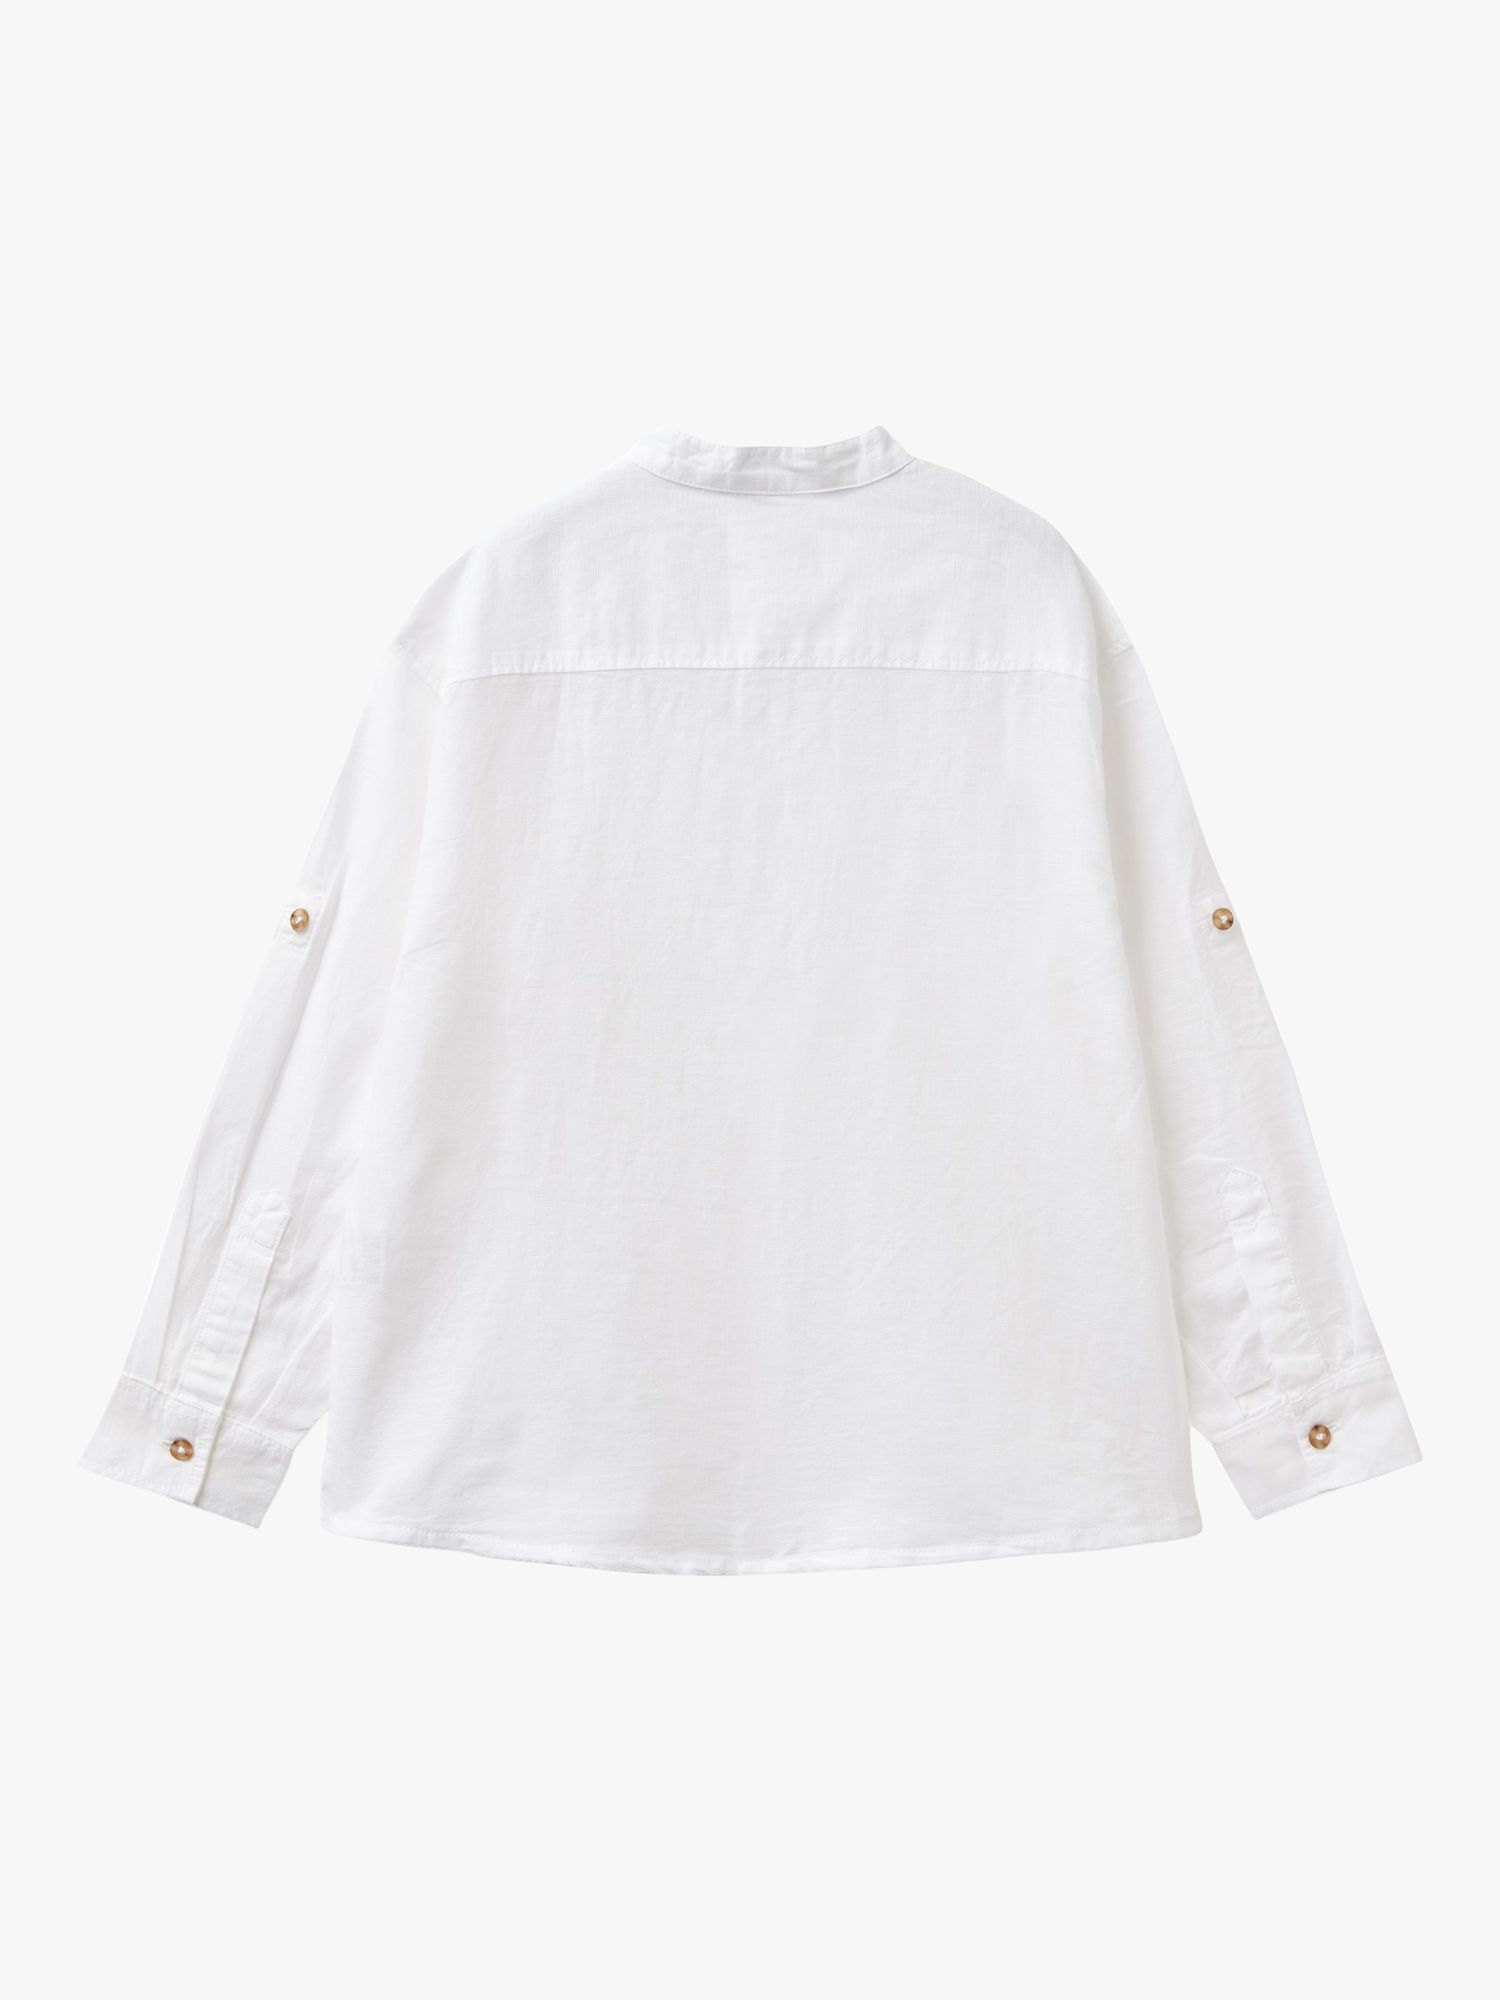 Benetton Kids' Linen Blend Long Sleeve Grandad Collar Shirt, Optical White, 6-7 years